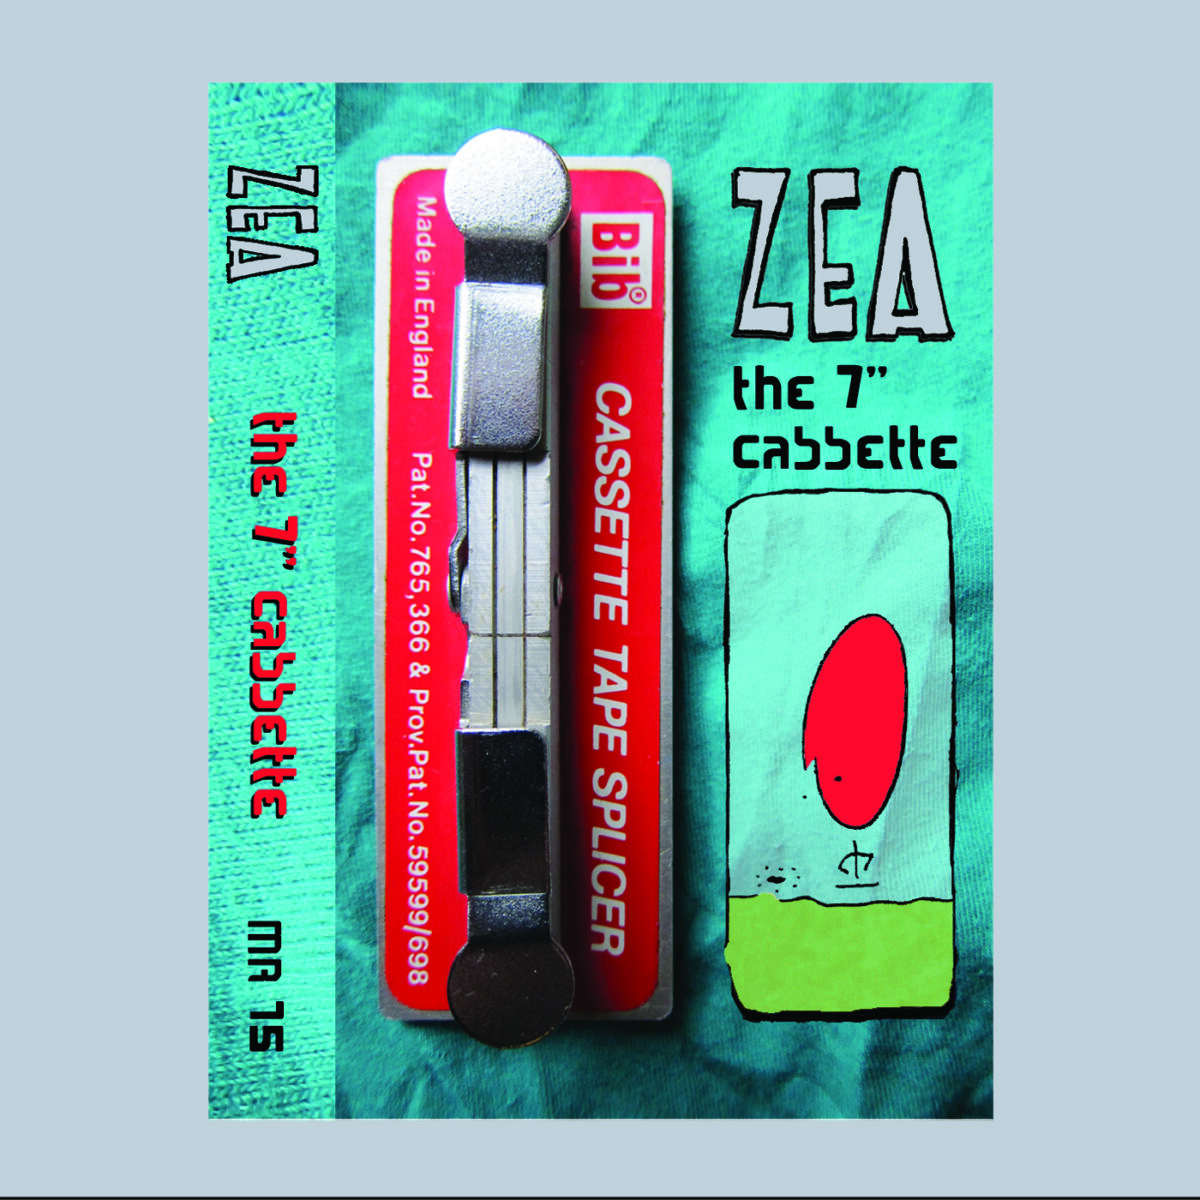 The 7" Cassette